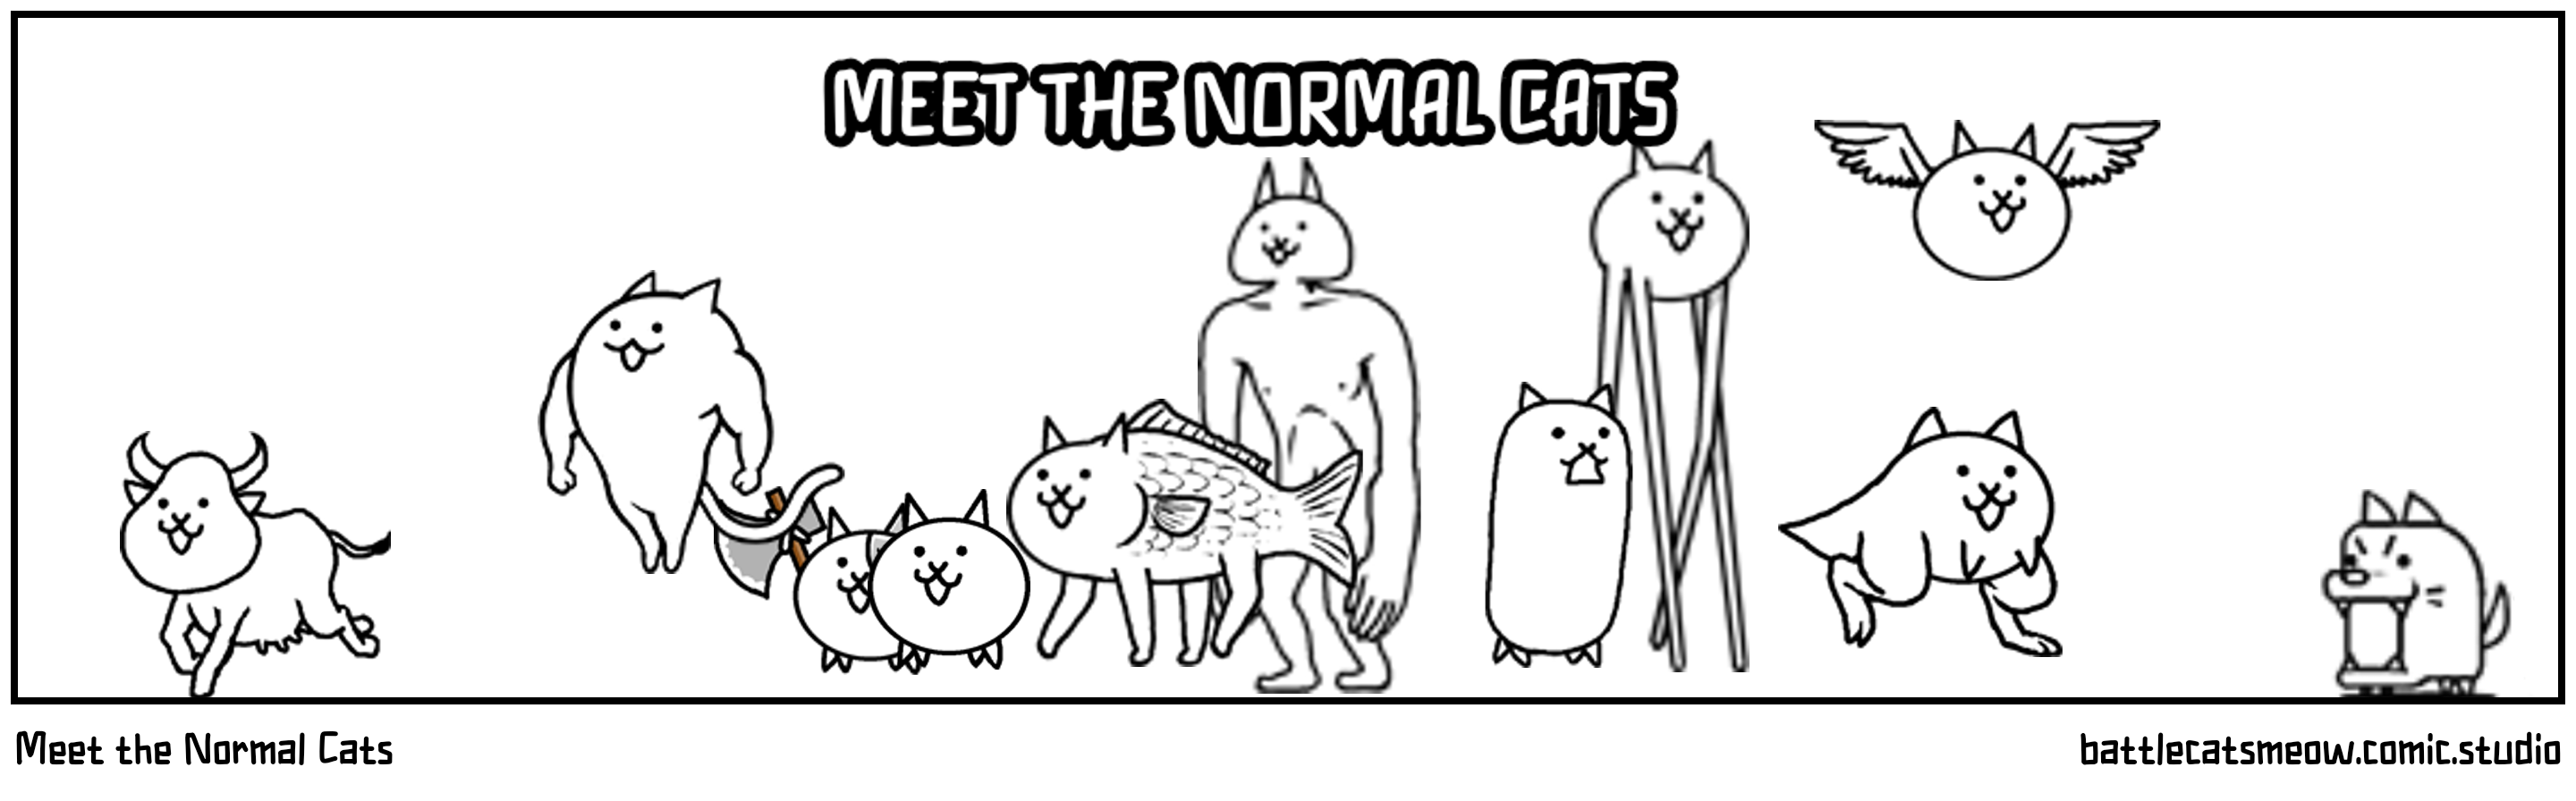 Meet the Normal Cats